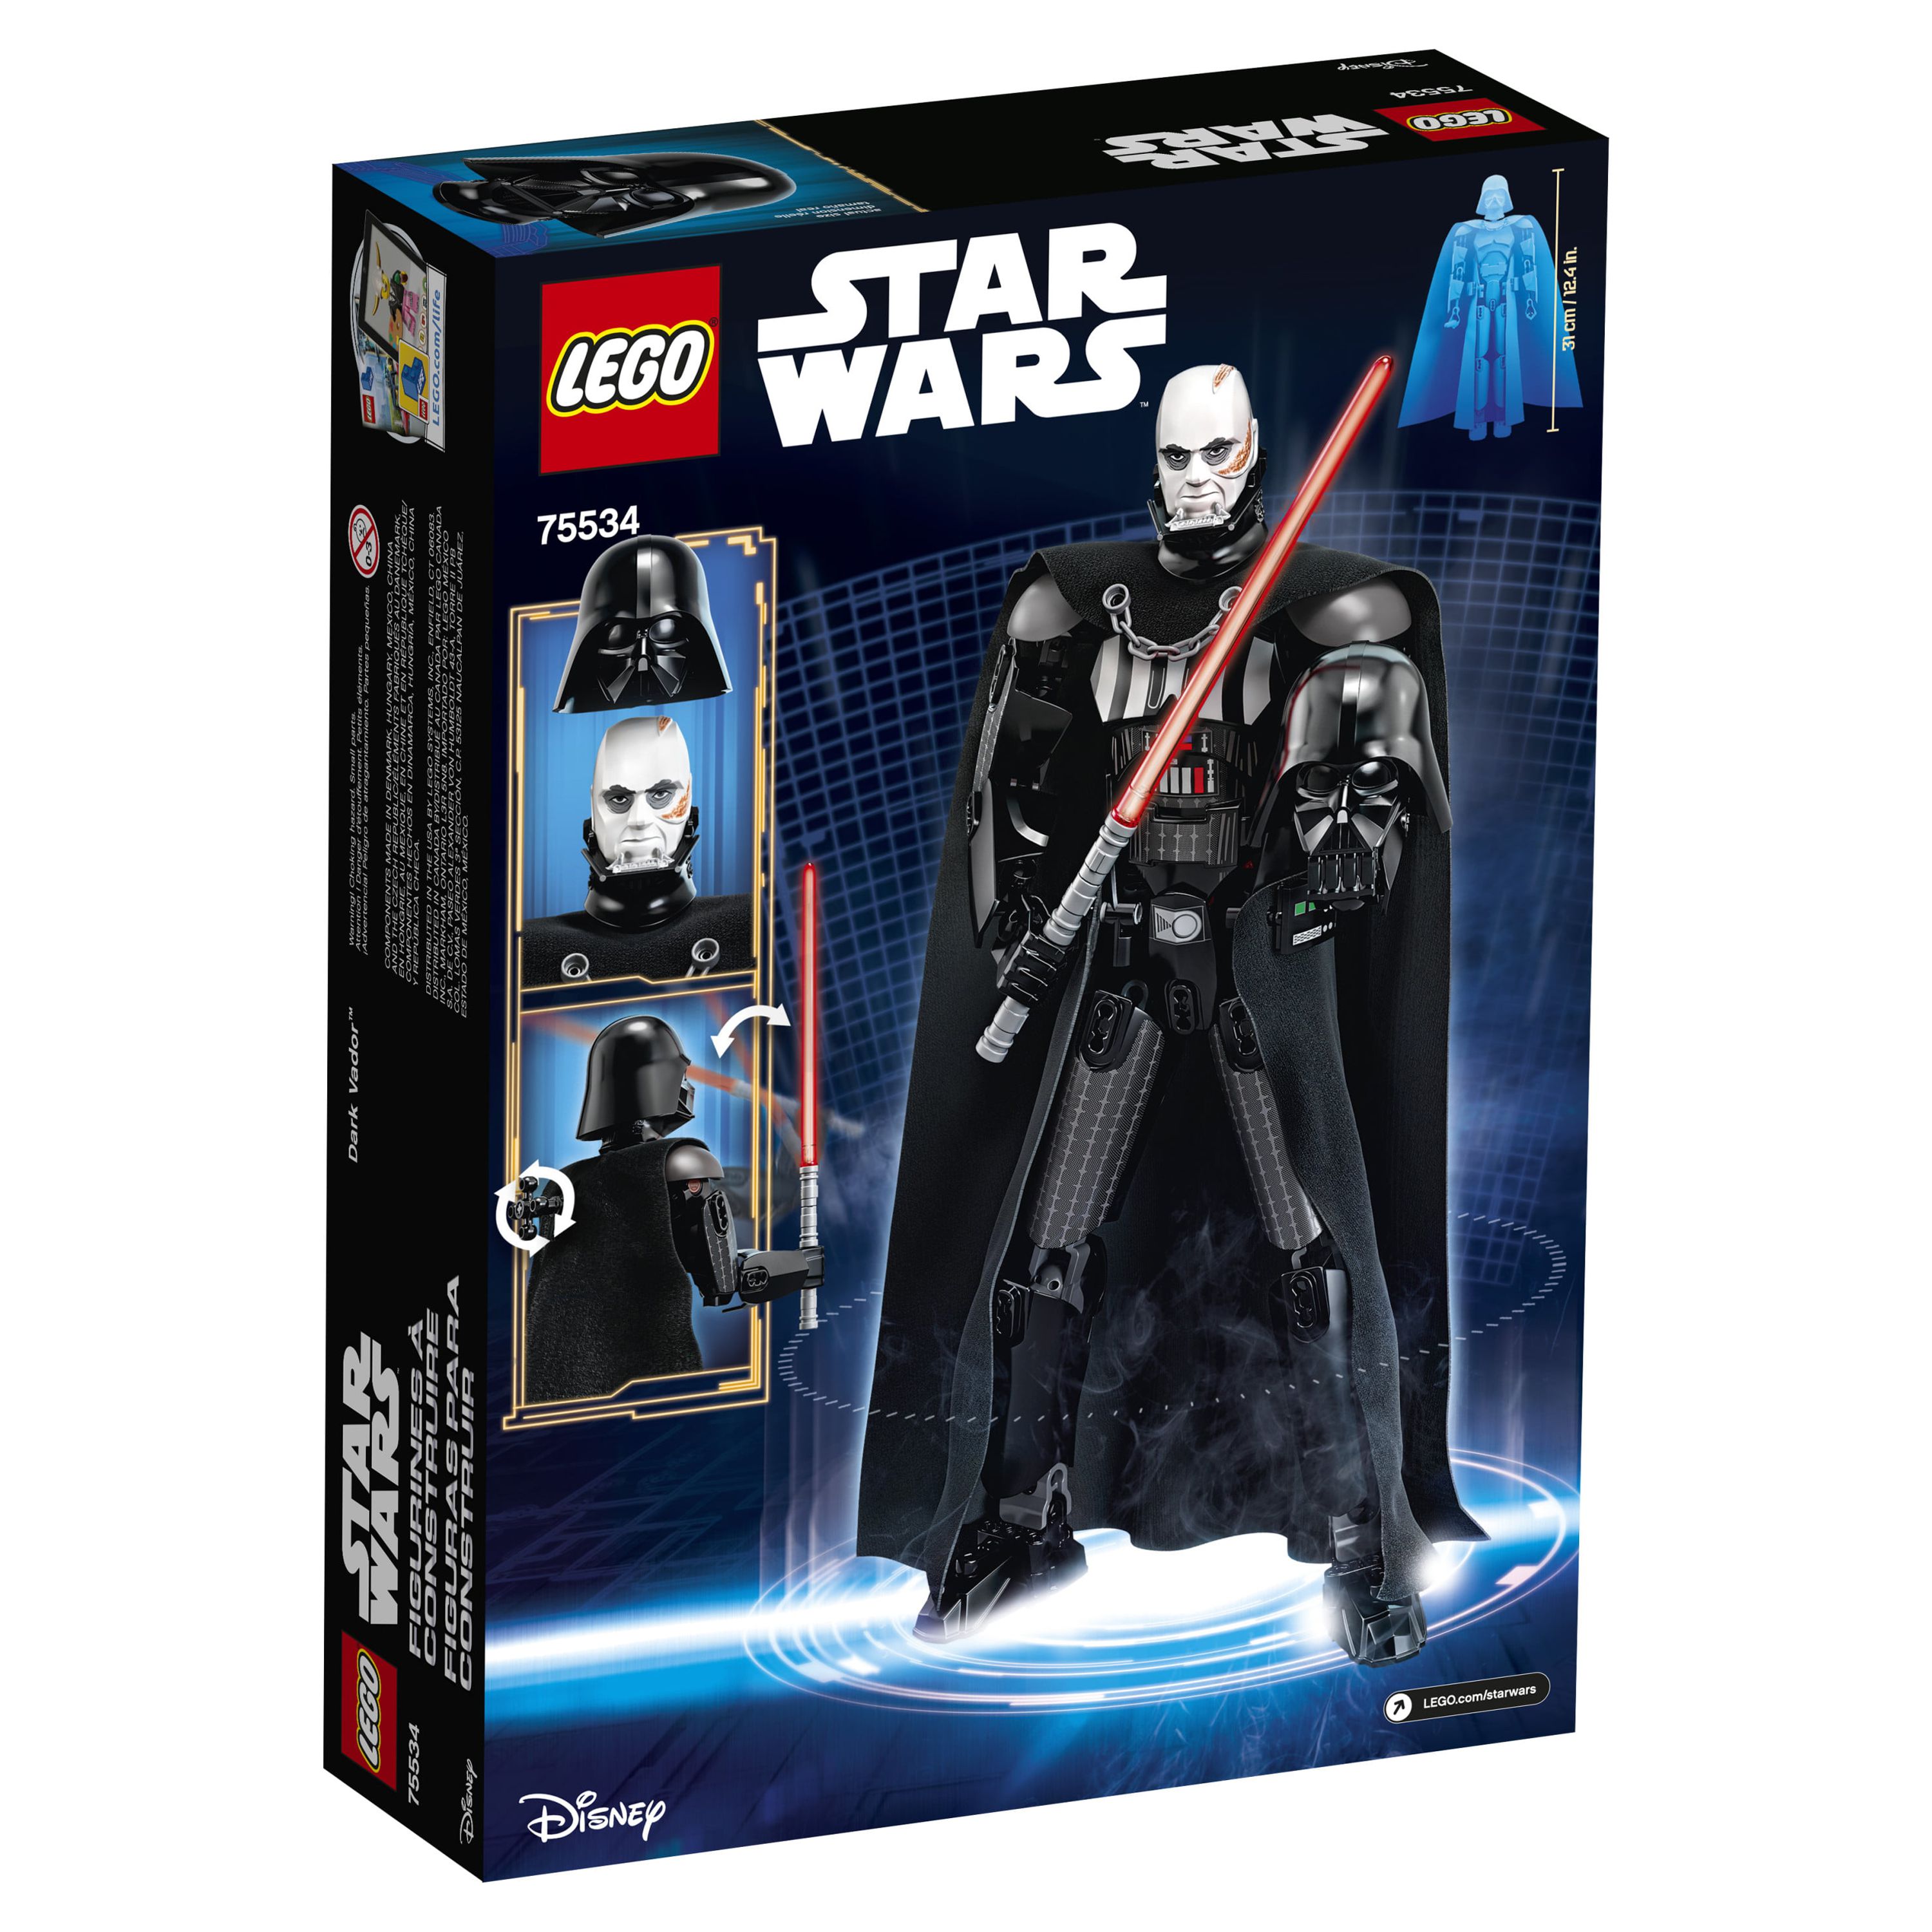 LEGO Star Wars Darth Vader 75534 - image 5 of 5